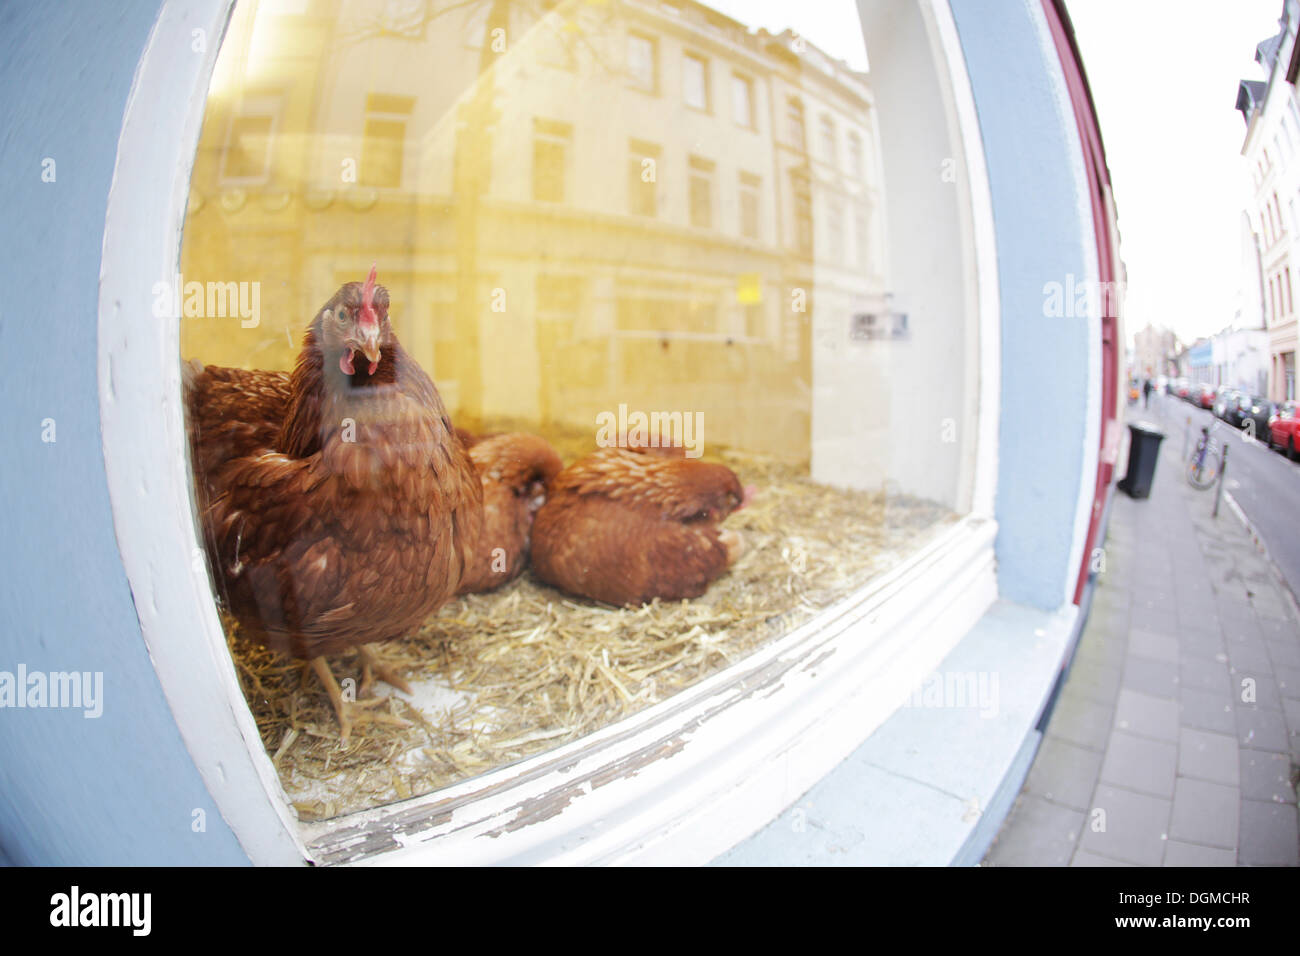 Chickens in a shop display window, Ehrenfeld, Cologne, Rhineland, North Rhine-Westphalia, Germany Stock Photo